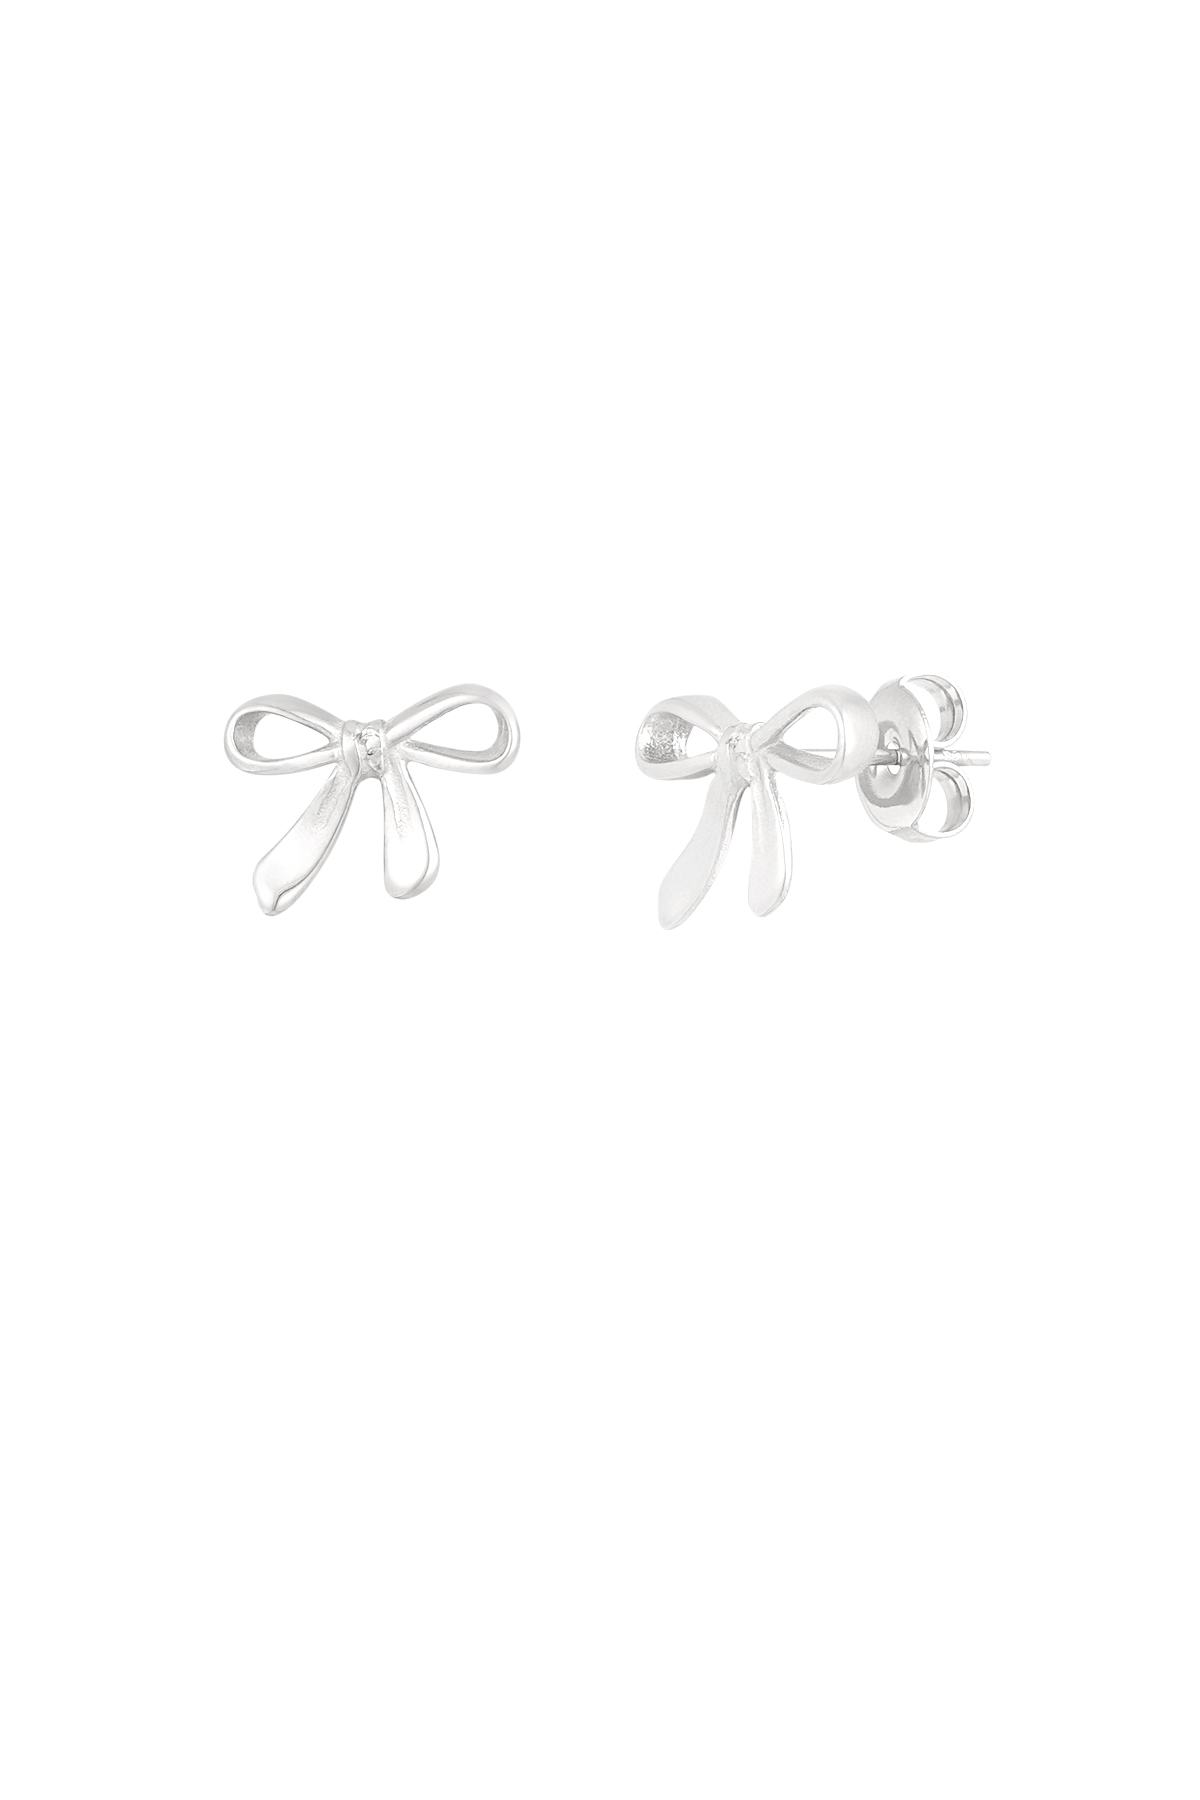 Earrings bows dream - silver h5 